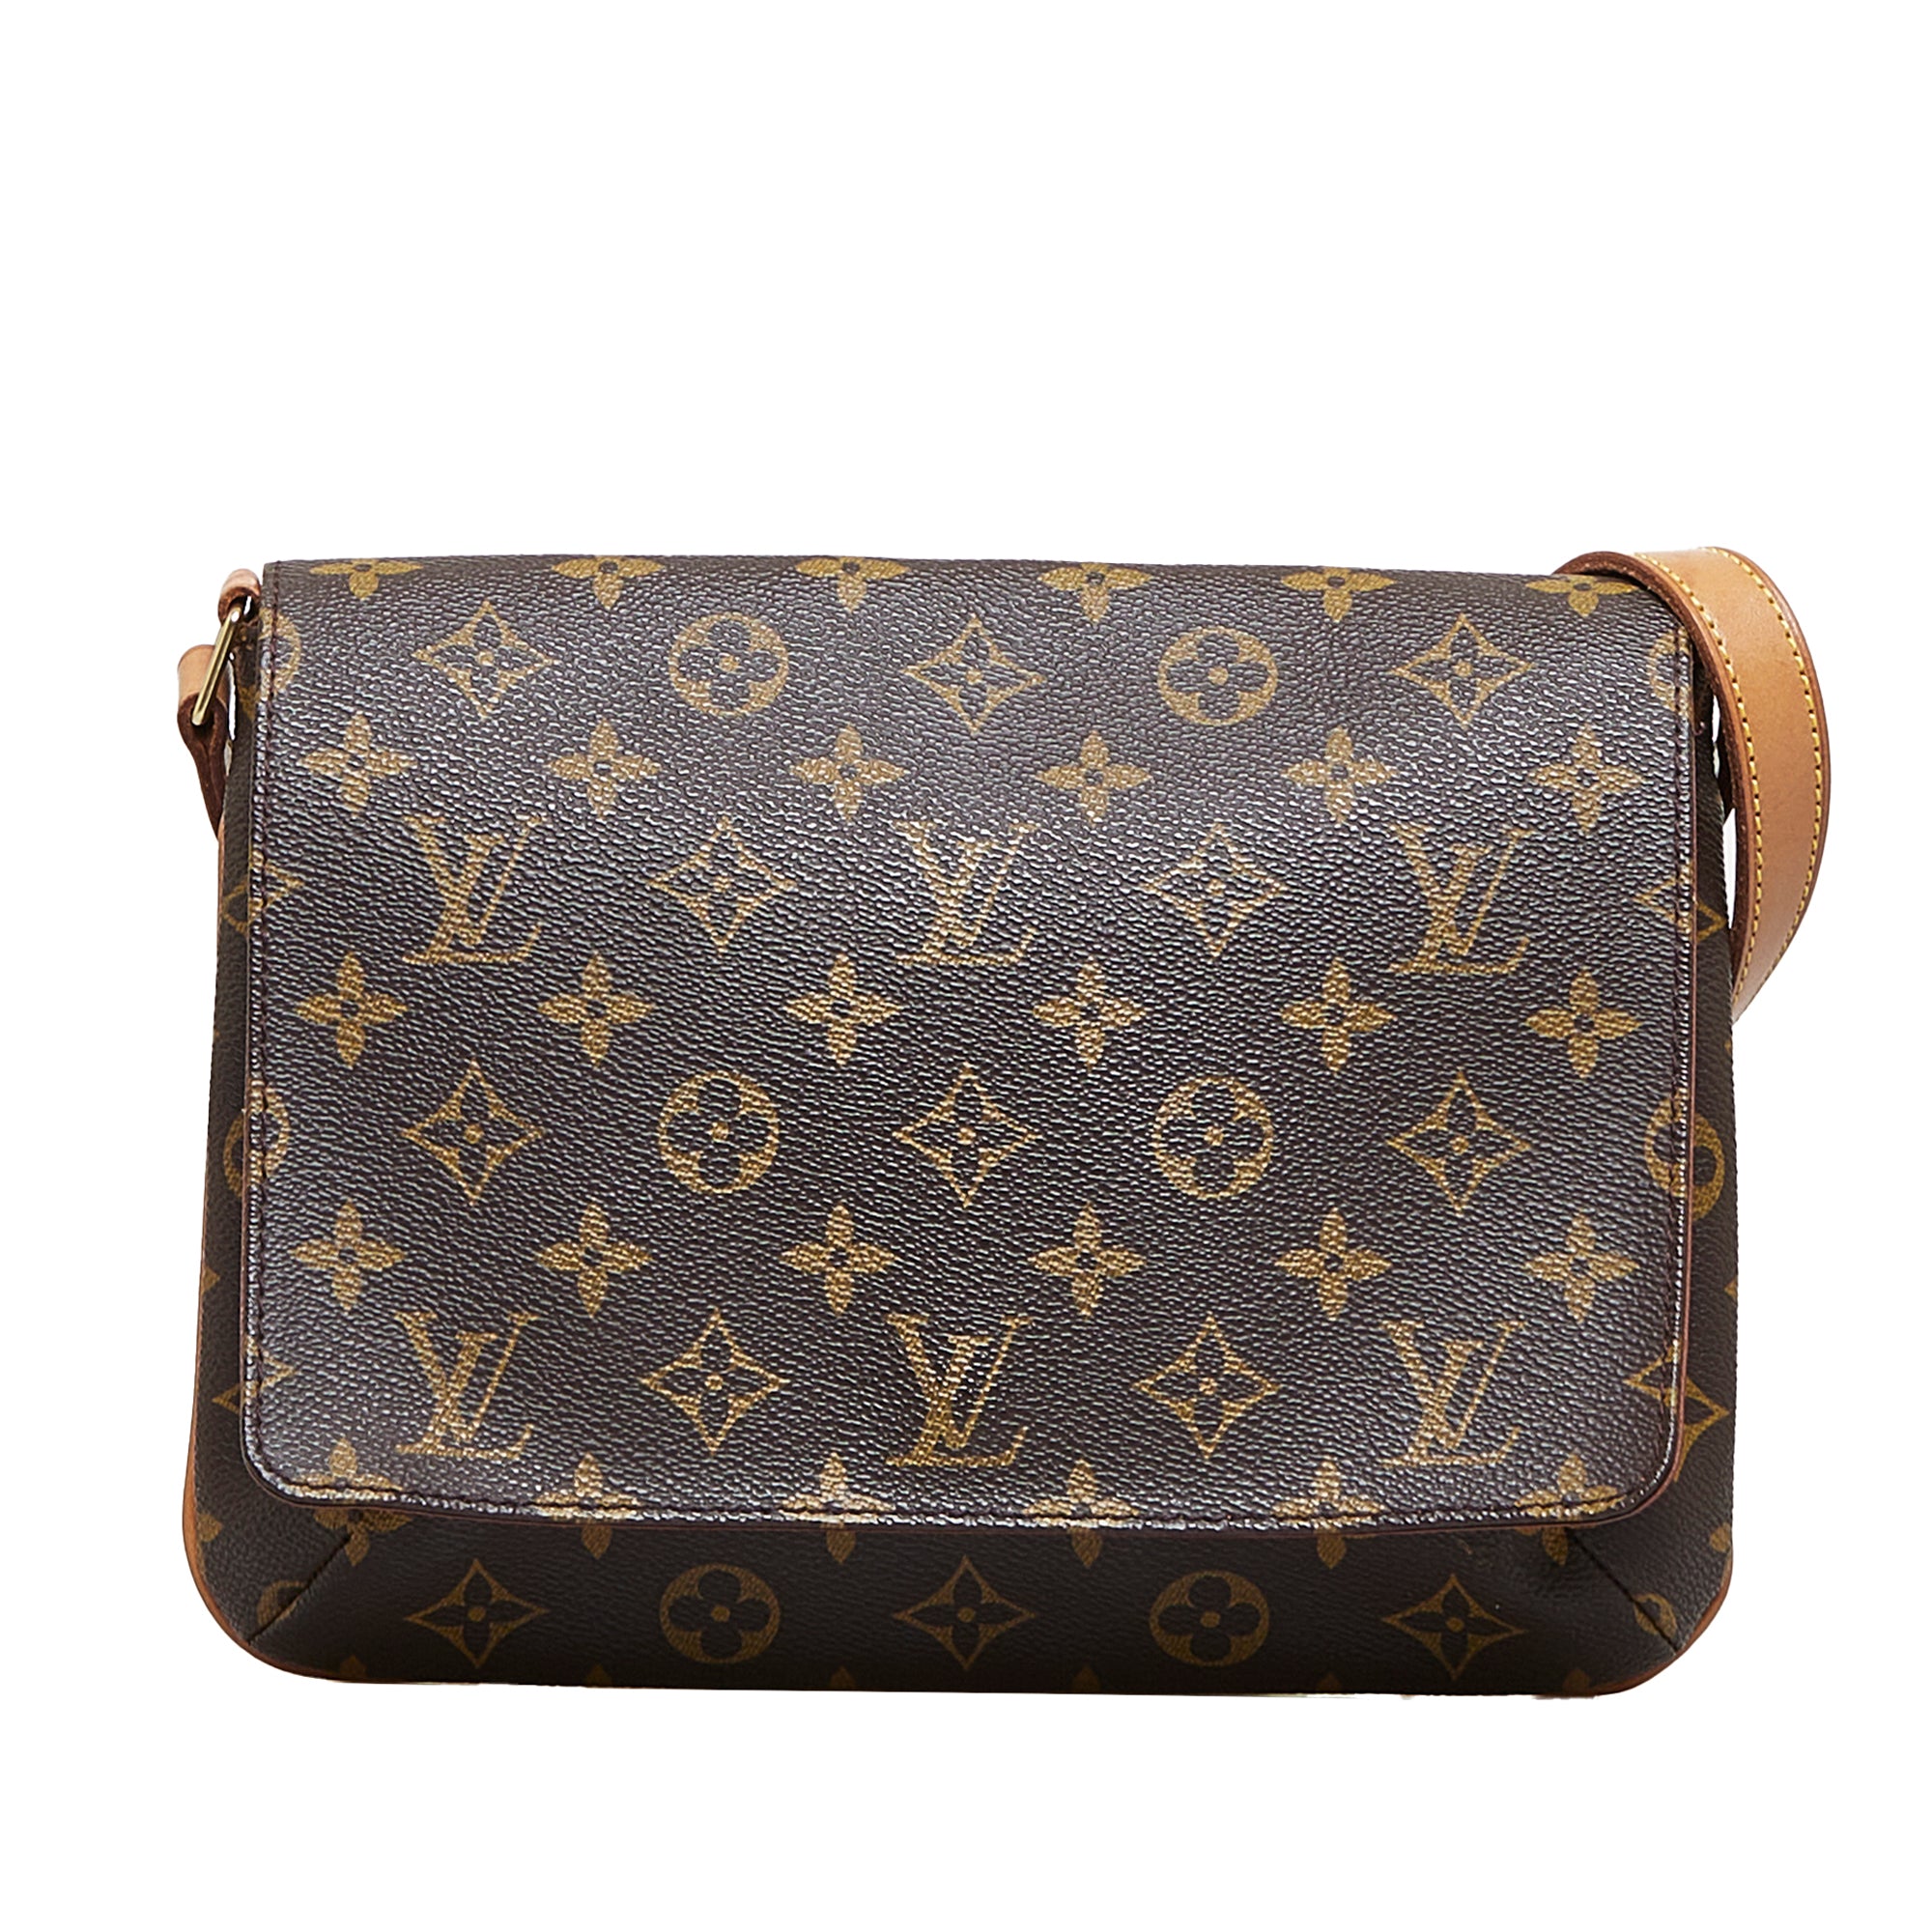 Louis Vuitton Musette Tango Shoulder Bag in Monogram - SOLD